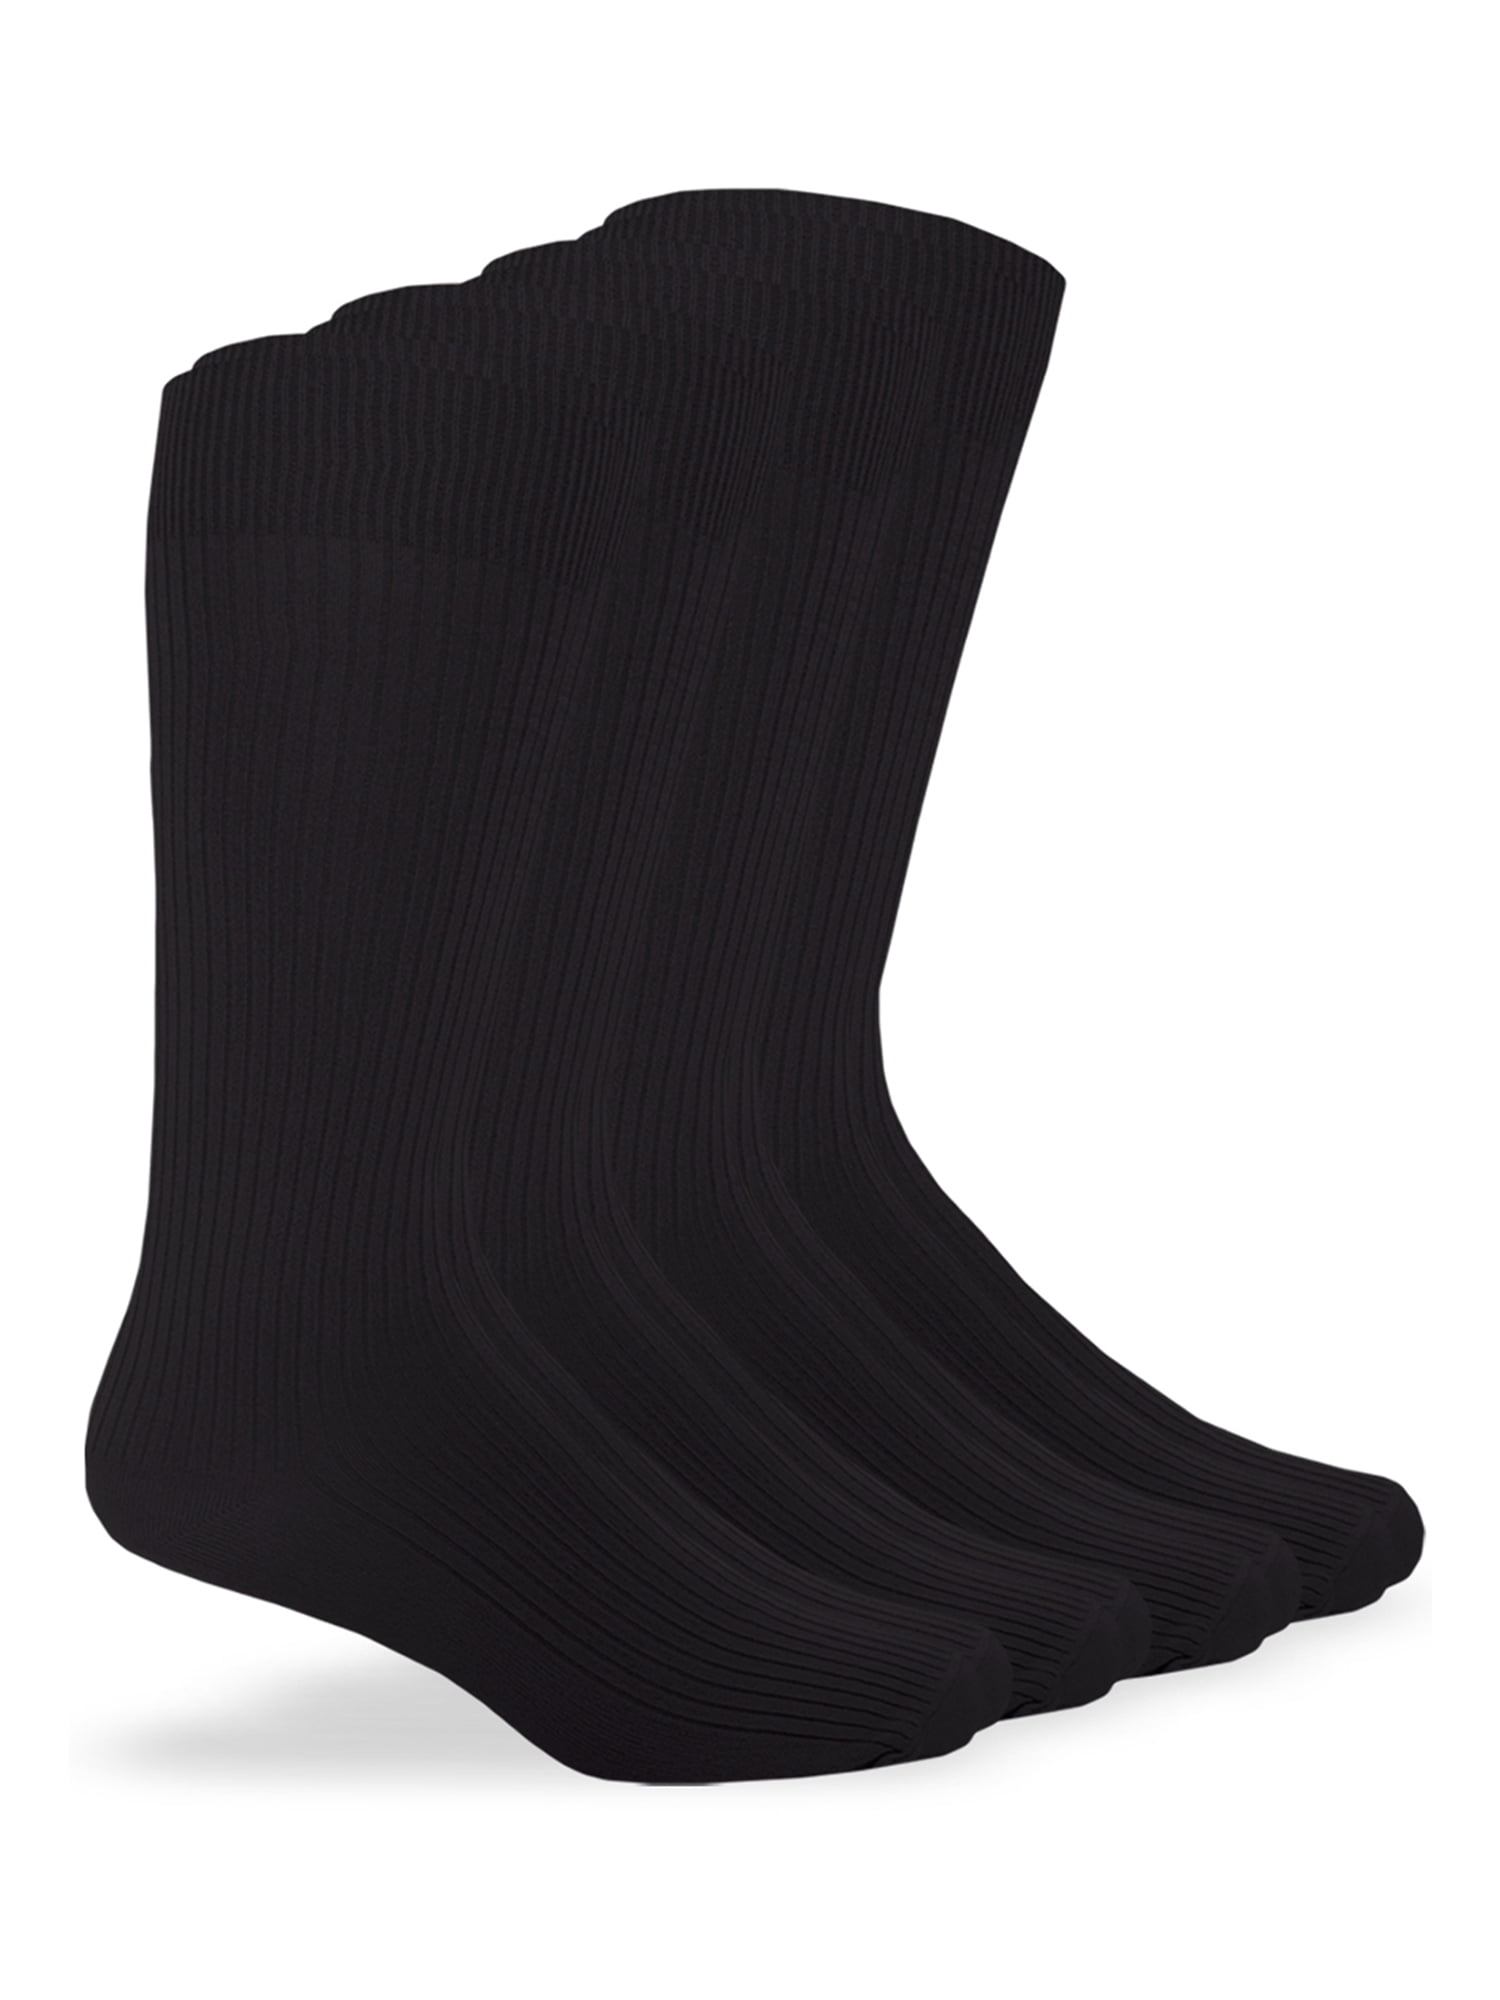 9-11 10-13 Crew Casual Dress Solid Black Socks Cotton Plain Ribbed Men's 4 Pairs